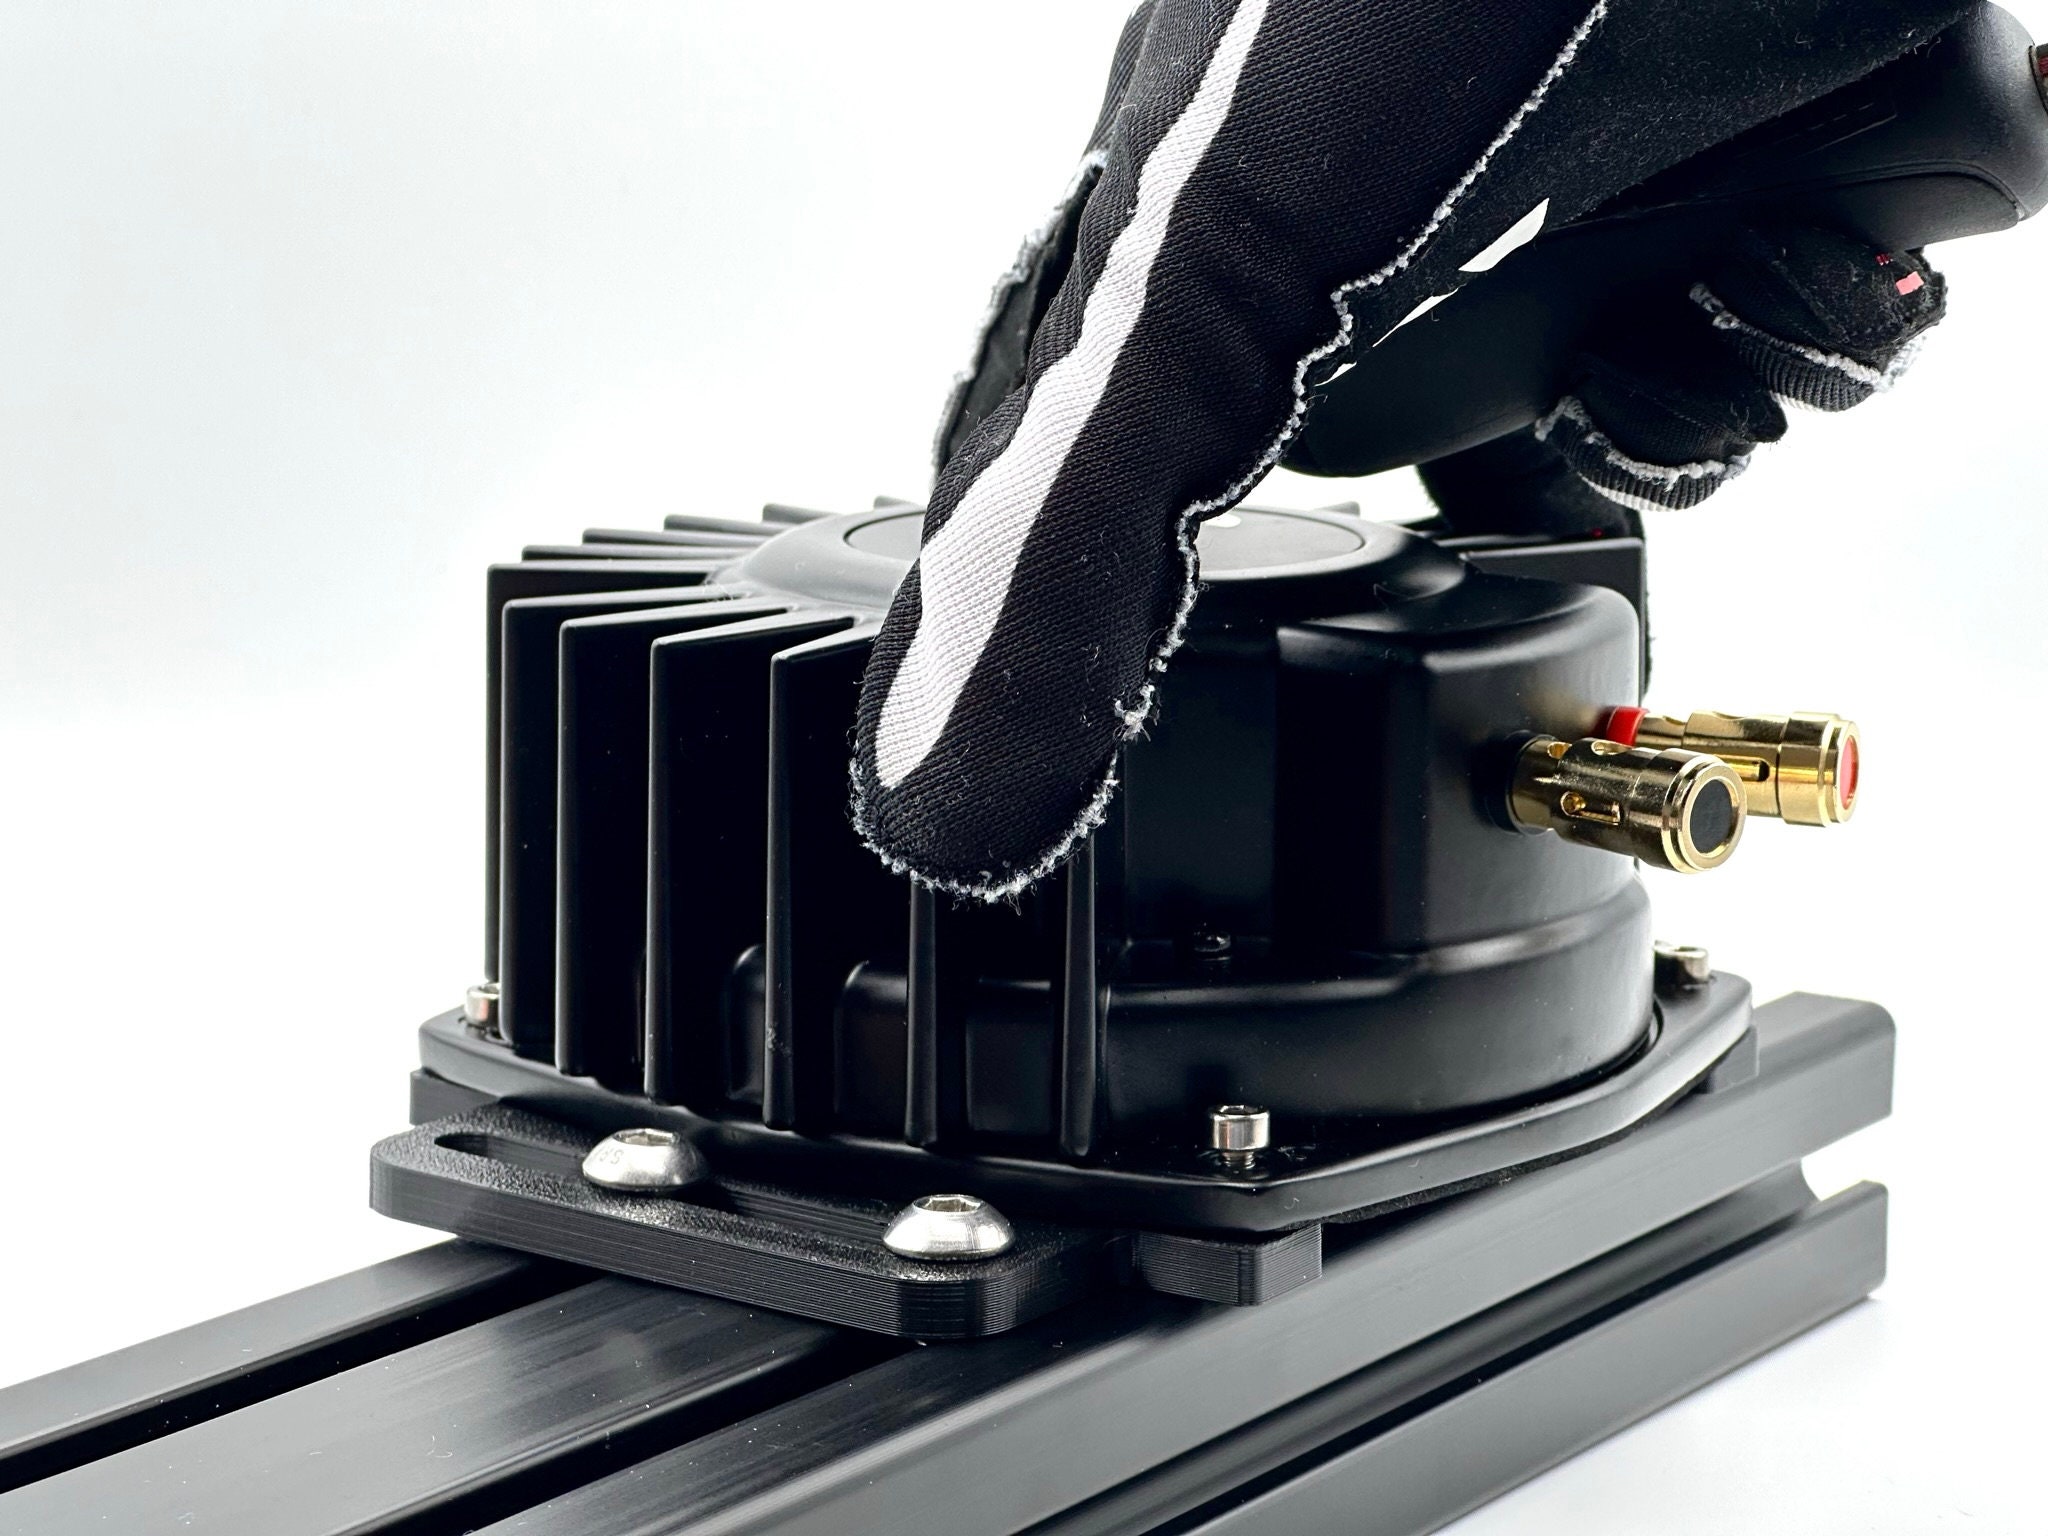 Transducer / Bass Shaker Mount for Sim Rig Aluminum Profile Fits Dayton  Audio BST-300EX 